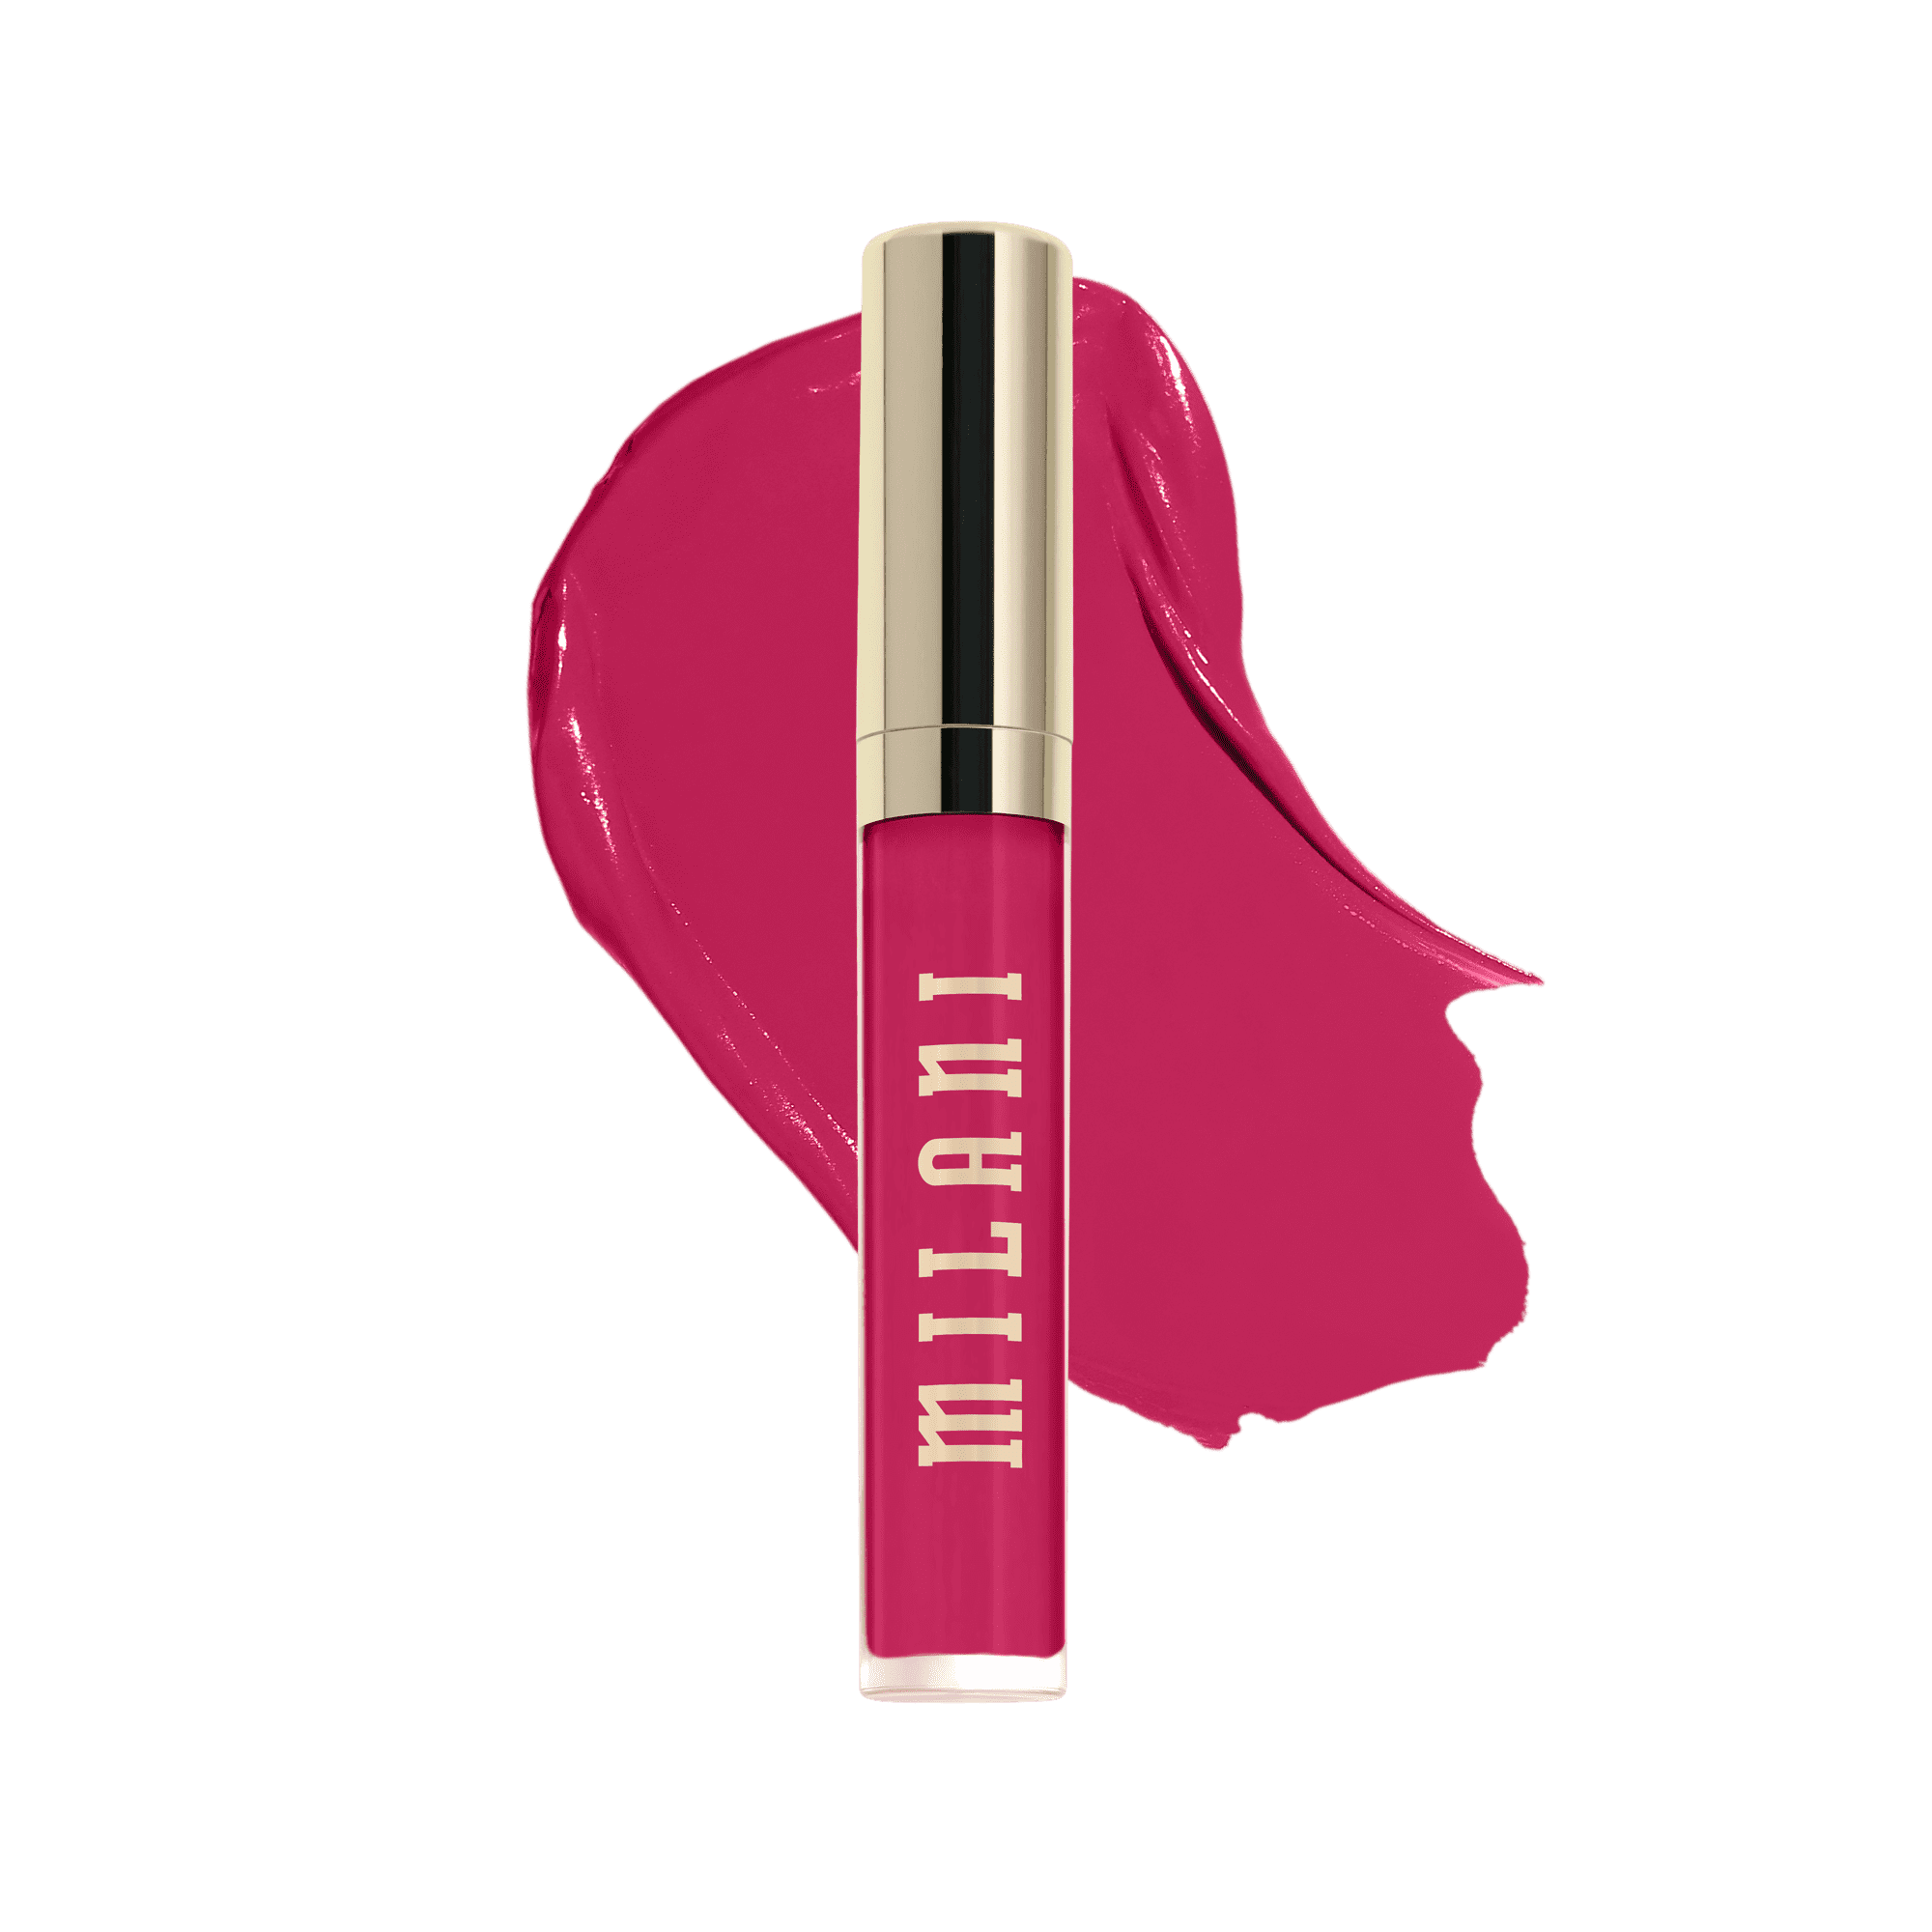 Milani Stay Put Liquid Lip Longwear Lip, Iconic